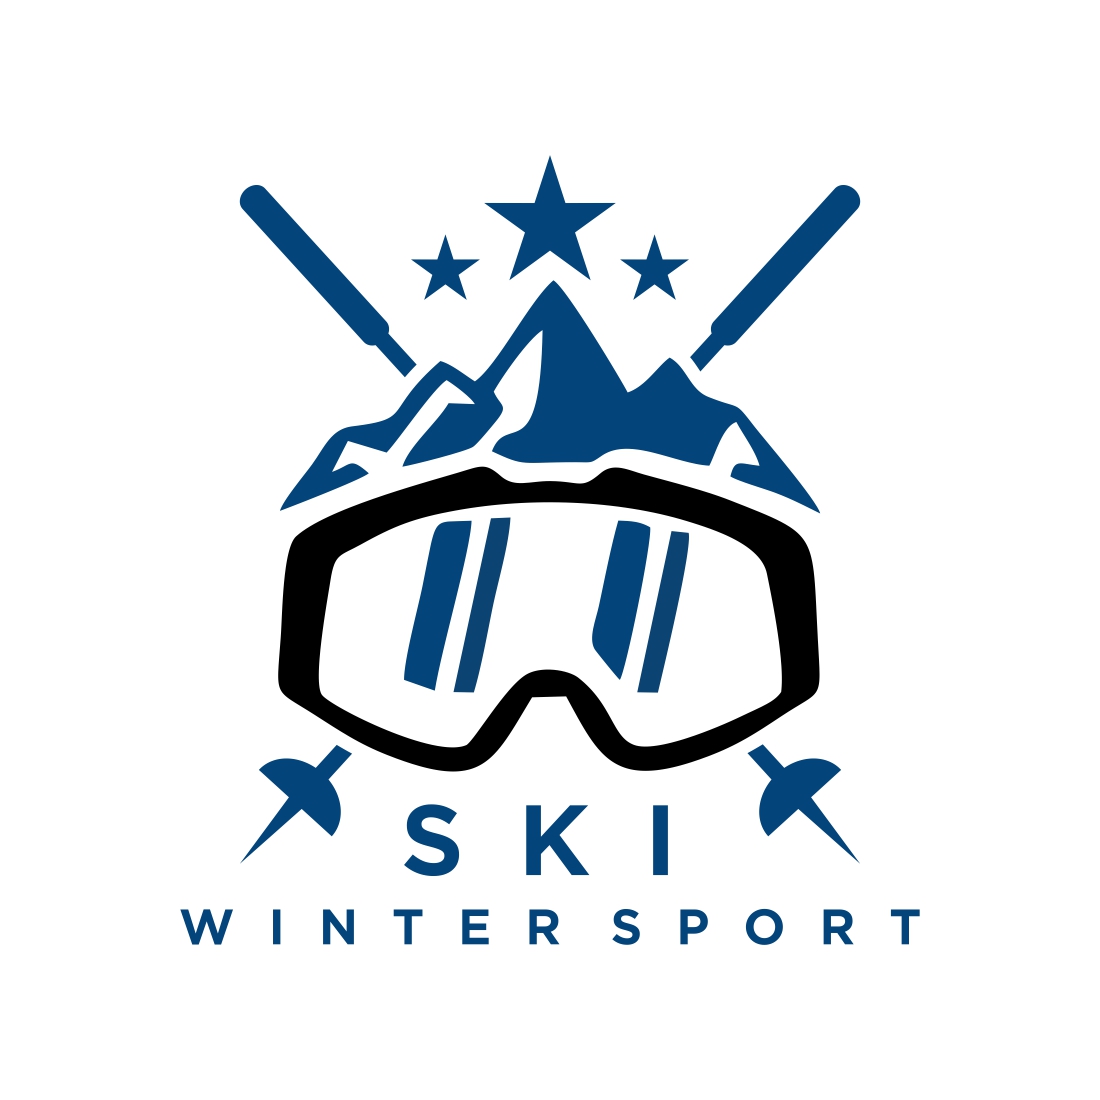 Skiing or winter sport logo emblem, design element Vector illustration Monochrome Graphic Art Concept for shirts, preview image.